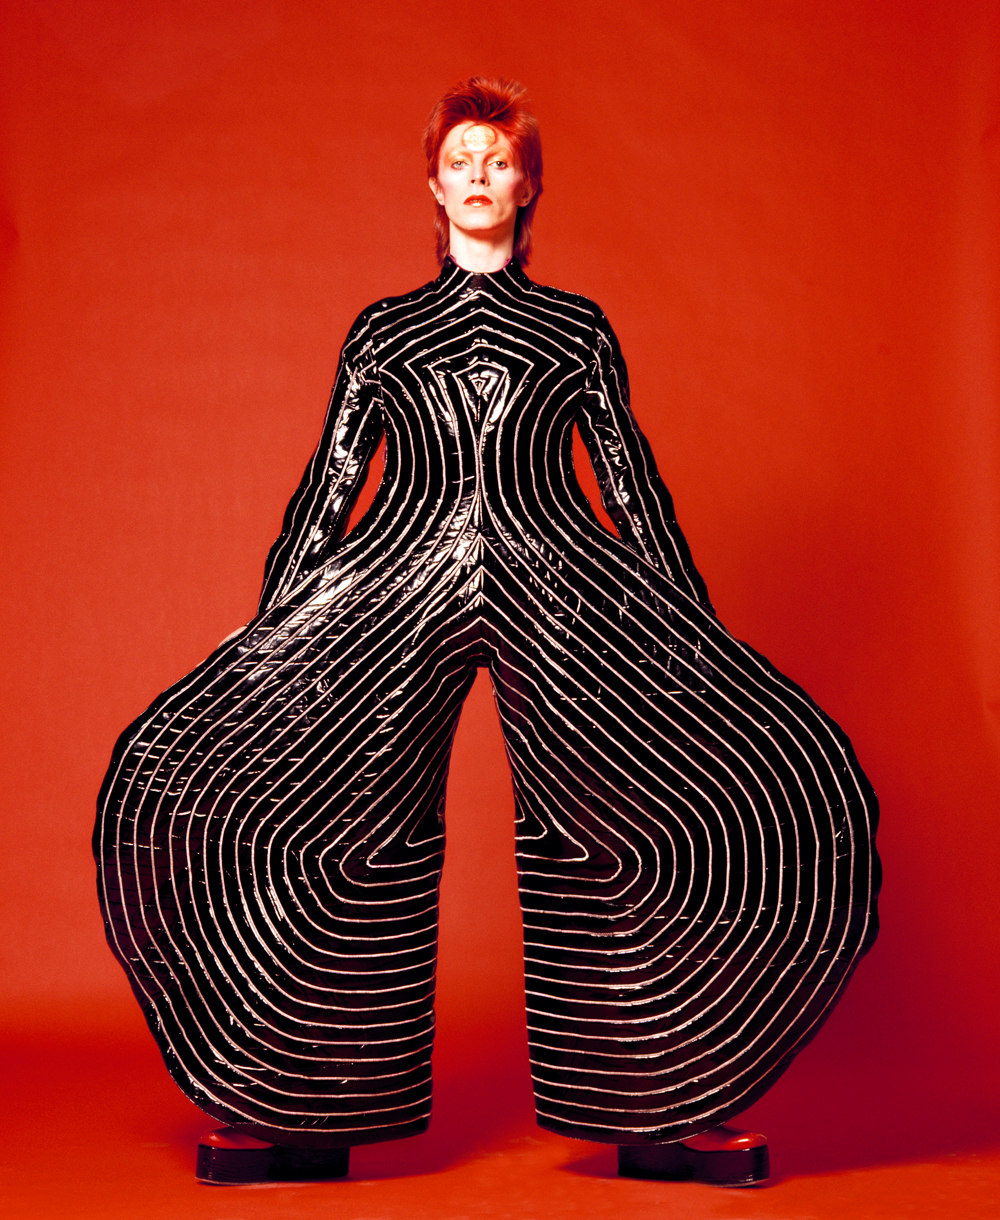 David Bowie Striped bodysuit for Aladdin Sane tour 1973